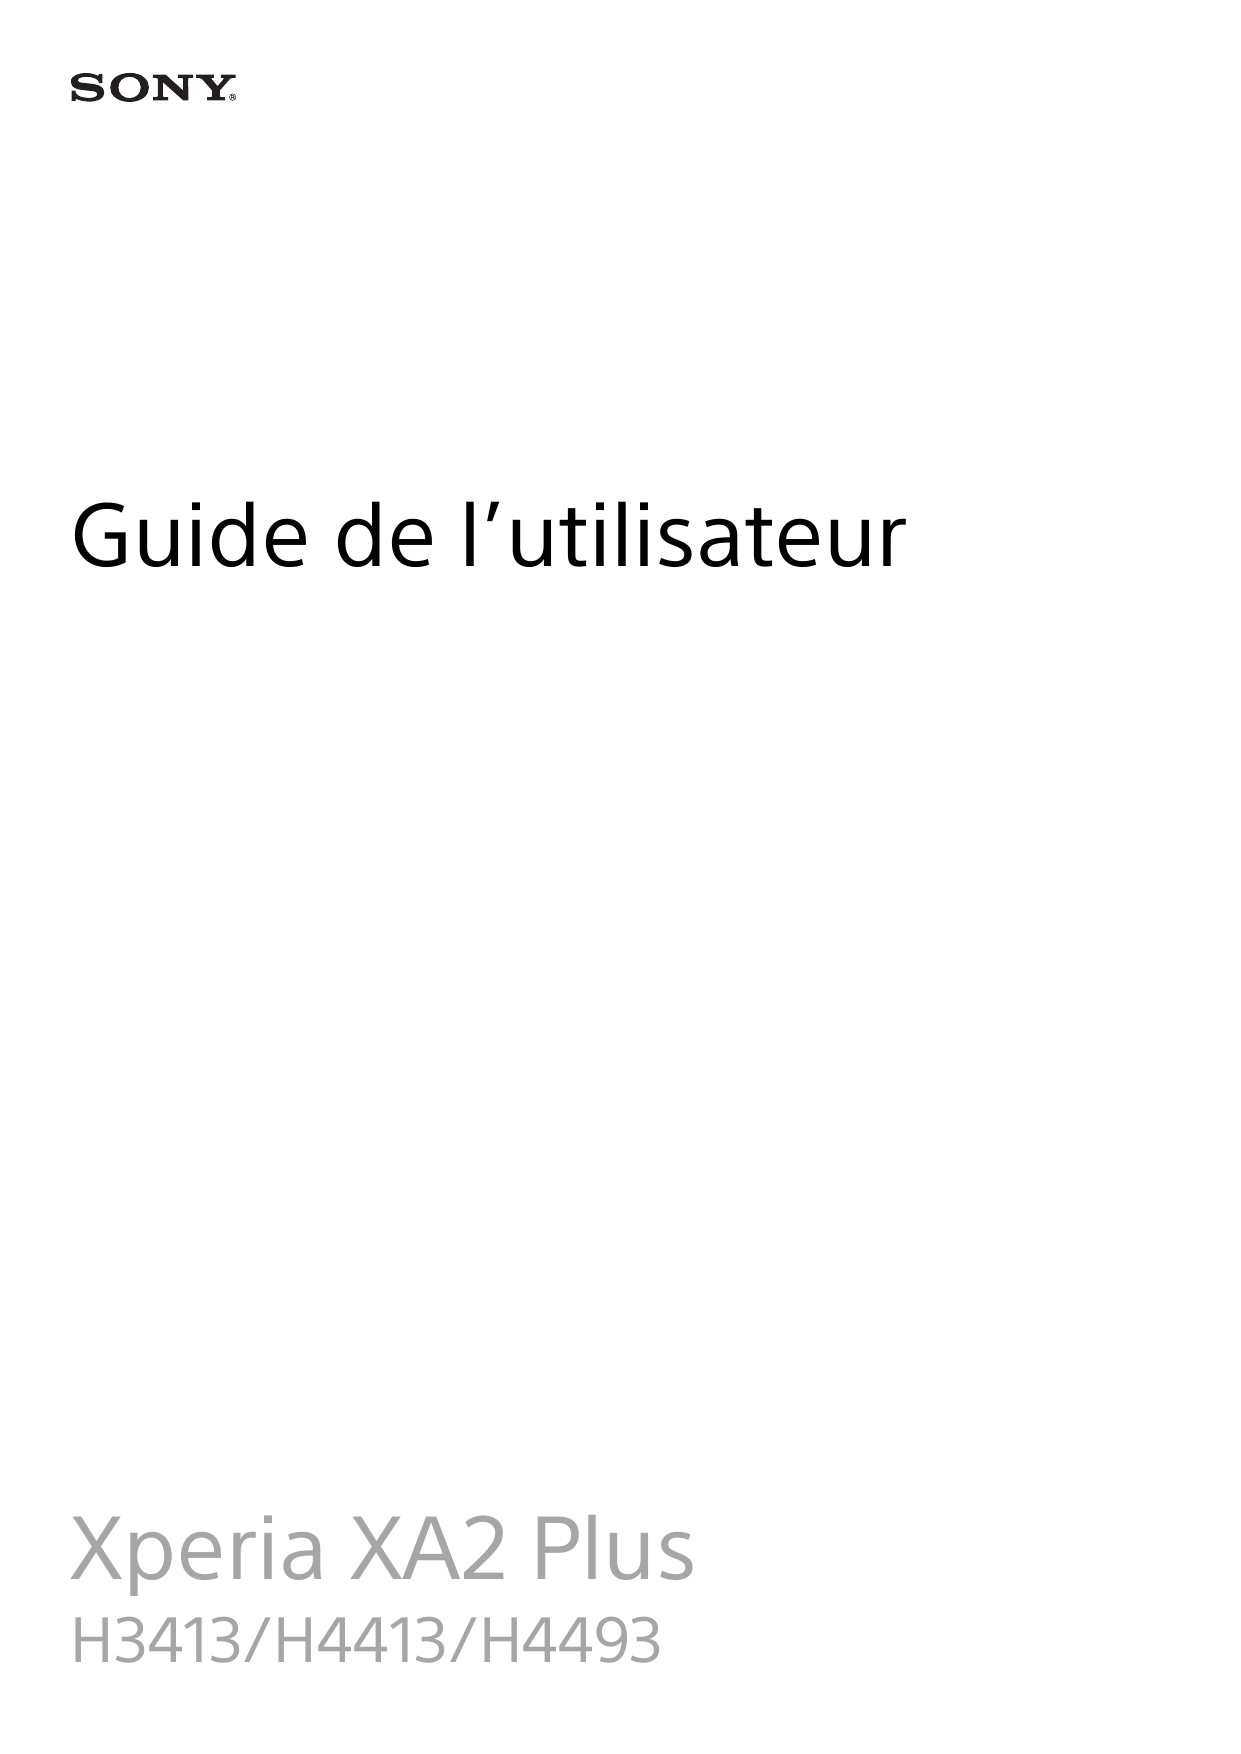 Guide de l’utilisateurXperia XA2 PlusH3413/H4413/H4493